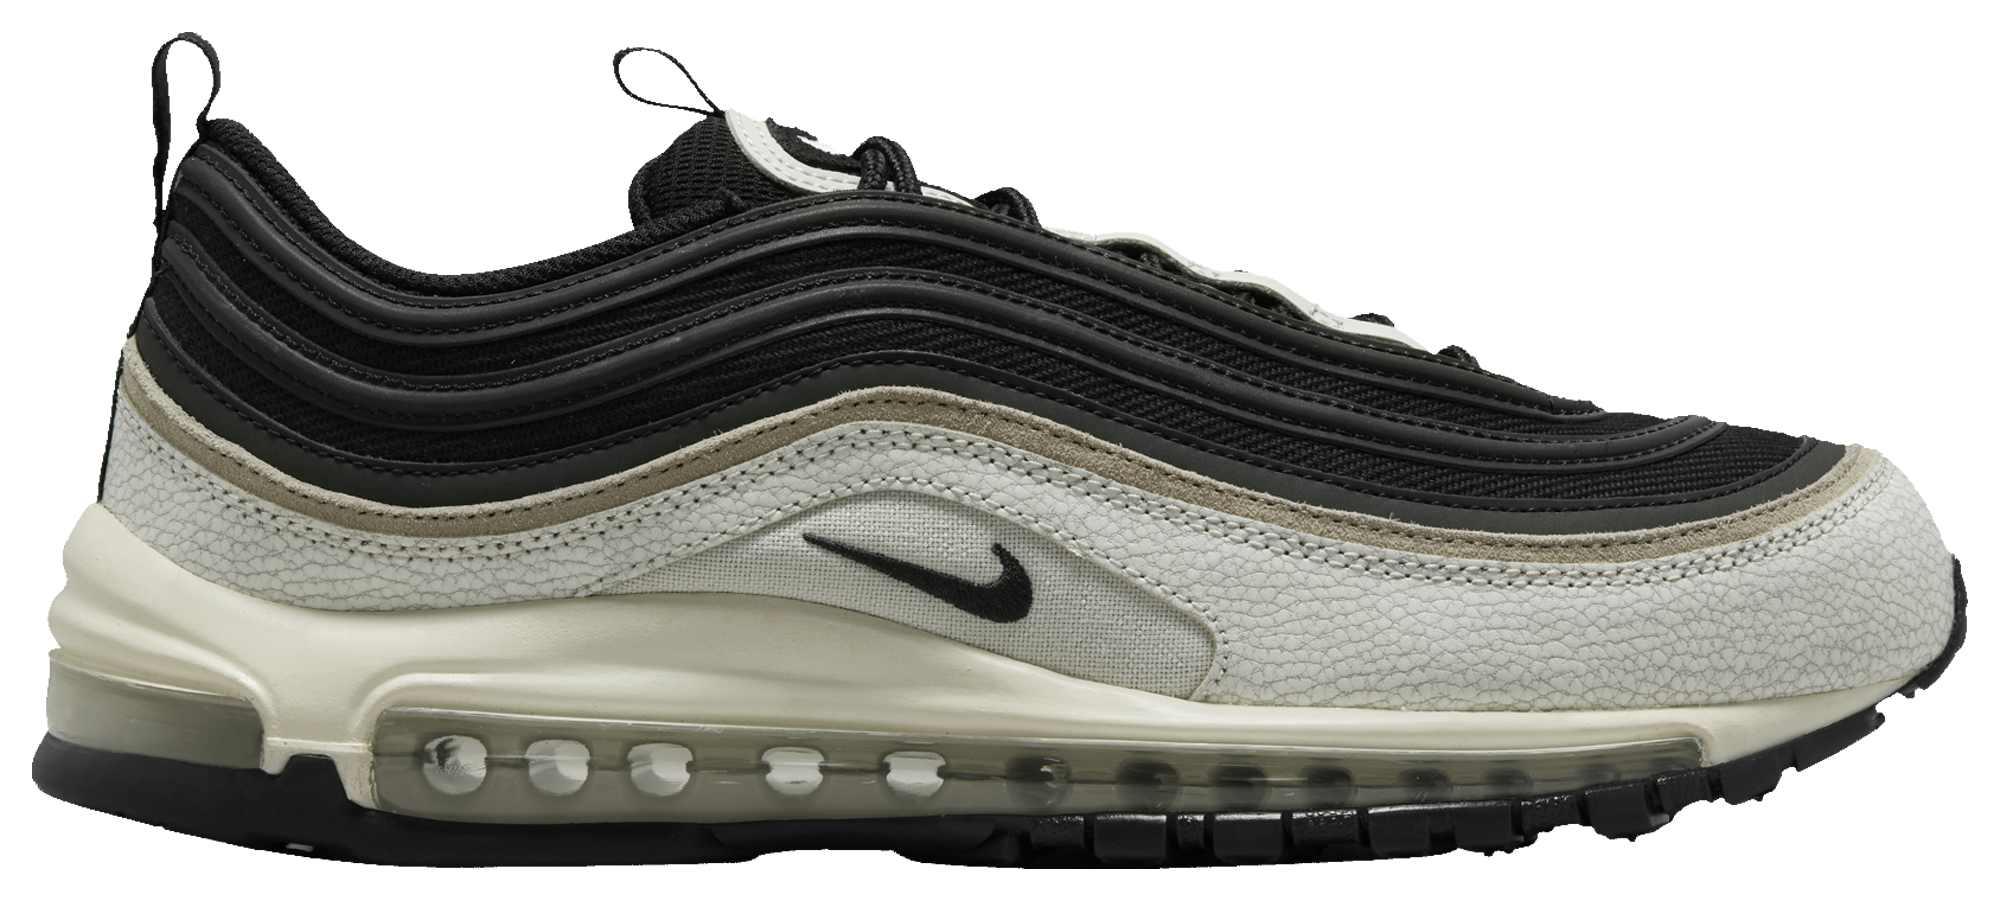 typist Regelmatigheid Impasse Nike Air Max 97 Essentials Twist | Foot Locker